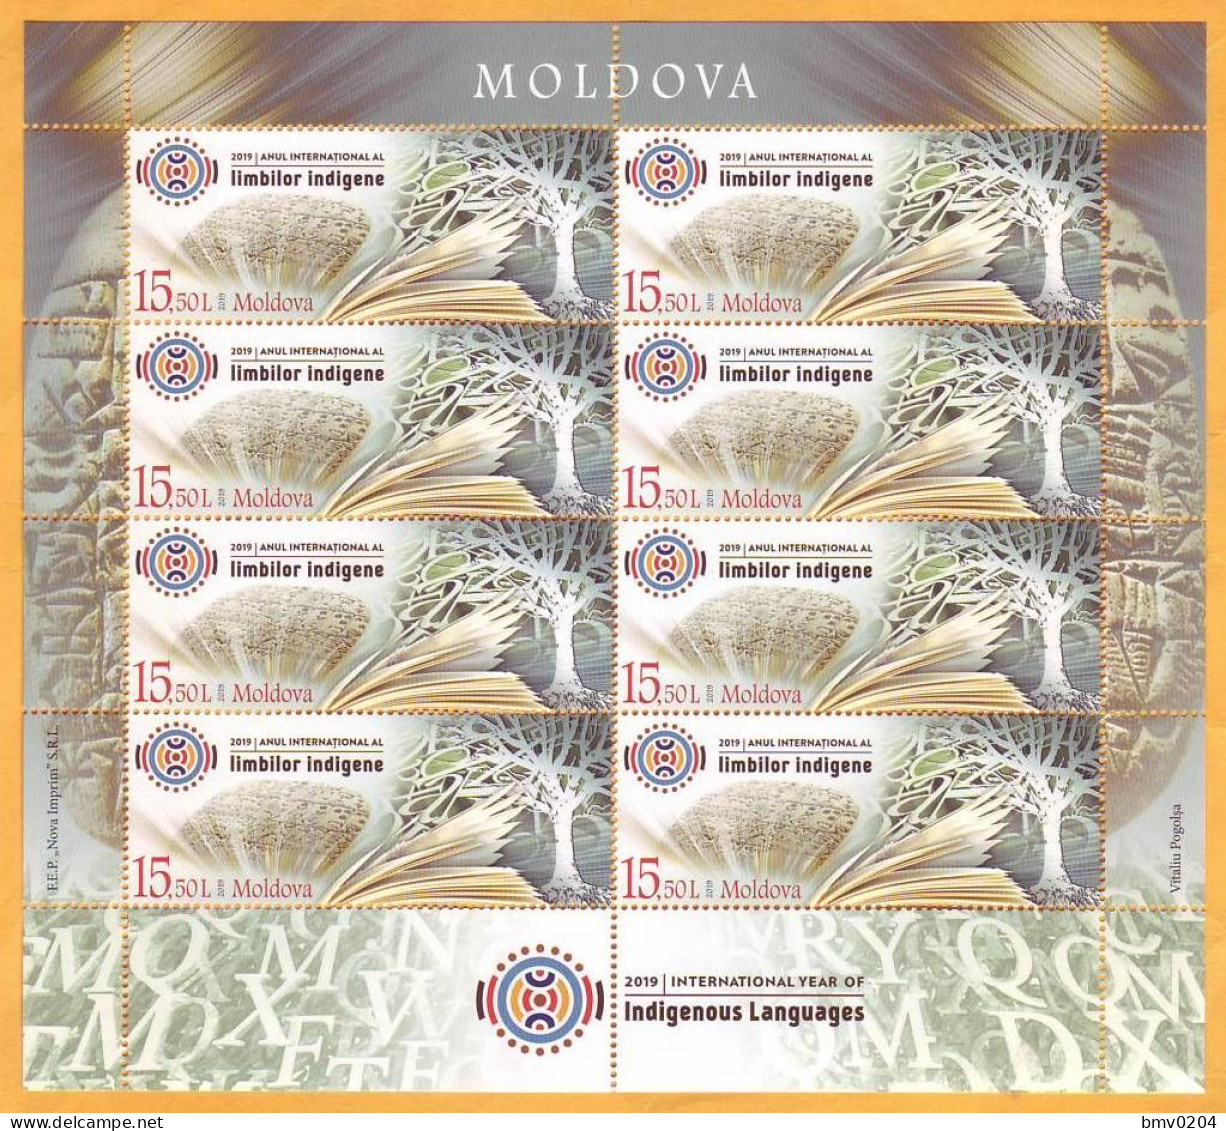 2019 Moldova Moldavie  International Year. UN. Indigenous Languages. Sheet Mint - UNO